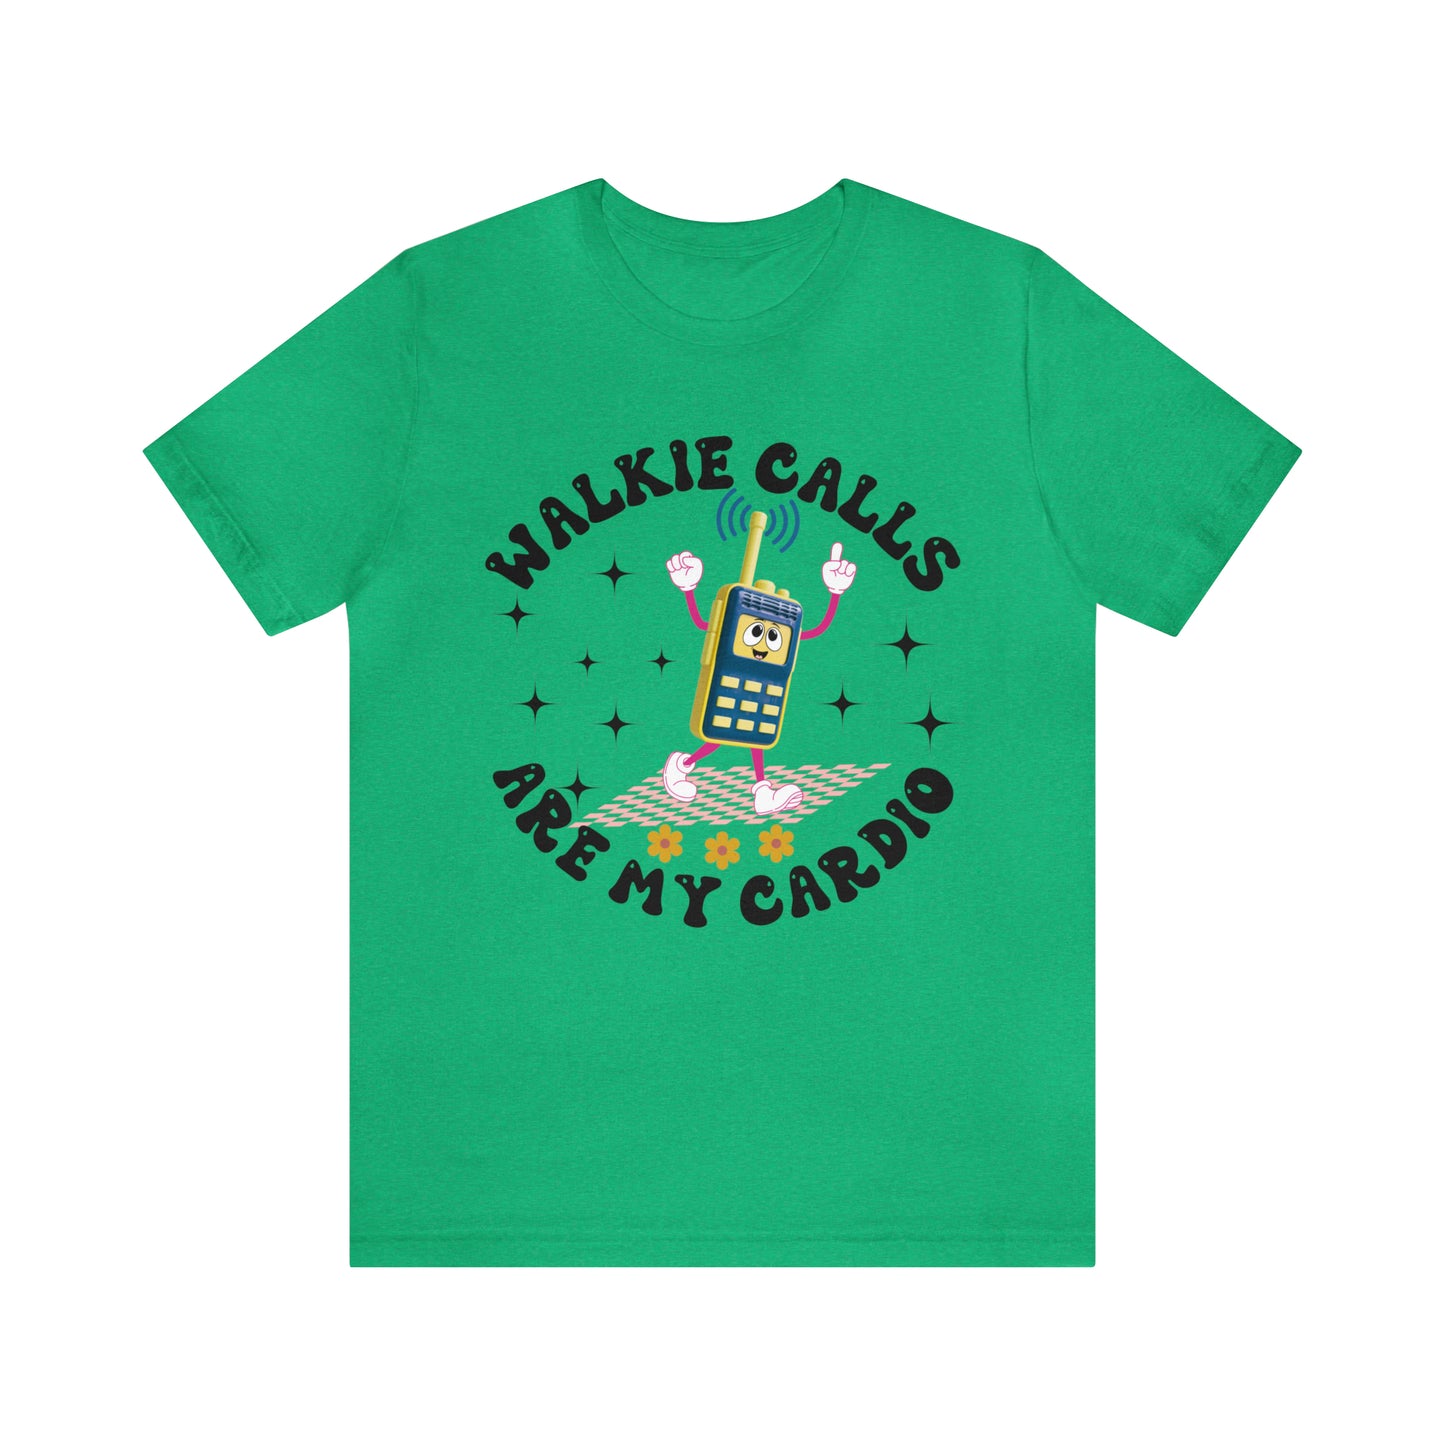 Walkie Calls Are My Cardio Shirt, School Psychologist Shirt, Special Education Shirt, Behavior Therapist Shirt, Sped Teacher Shirt, T702